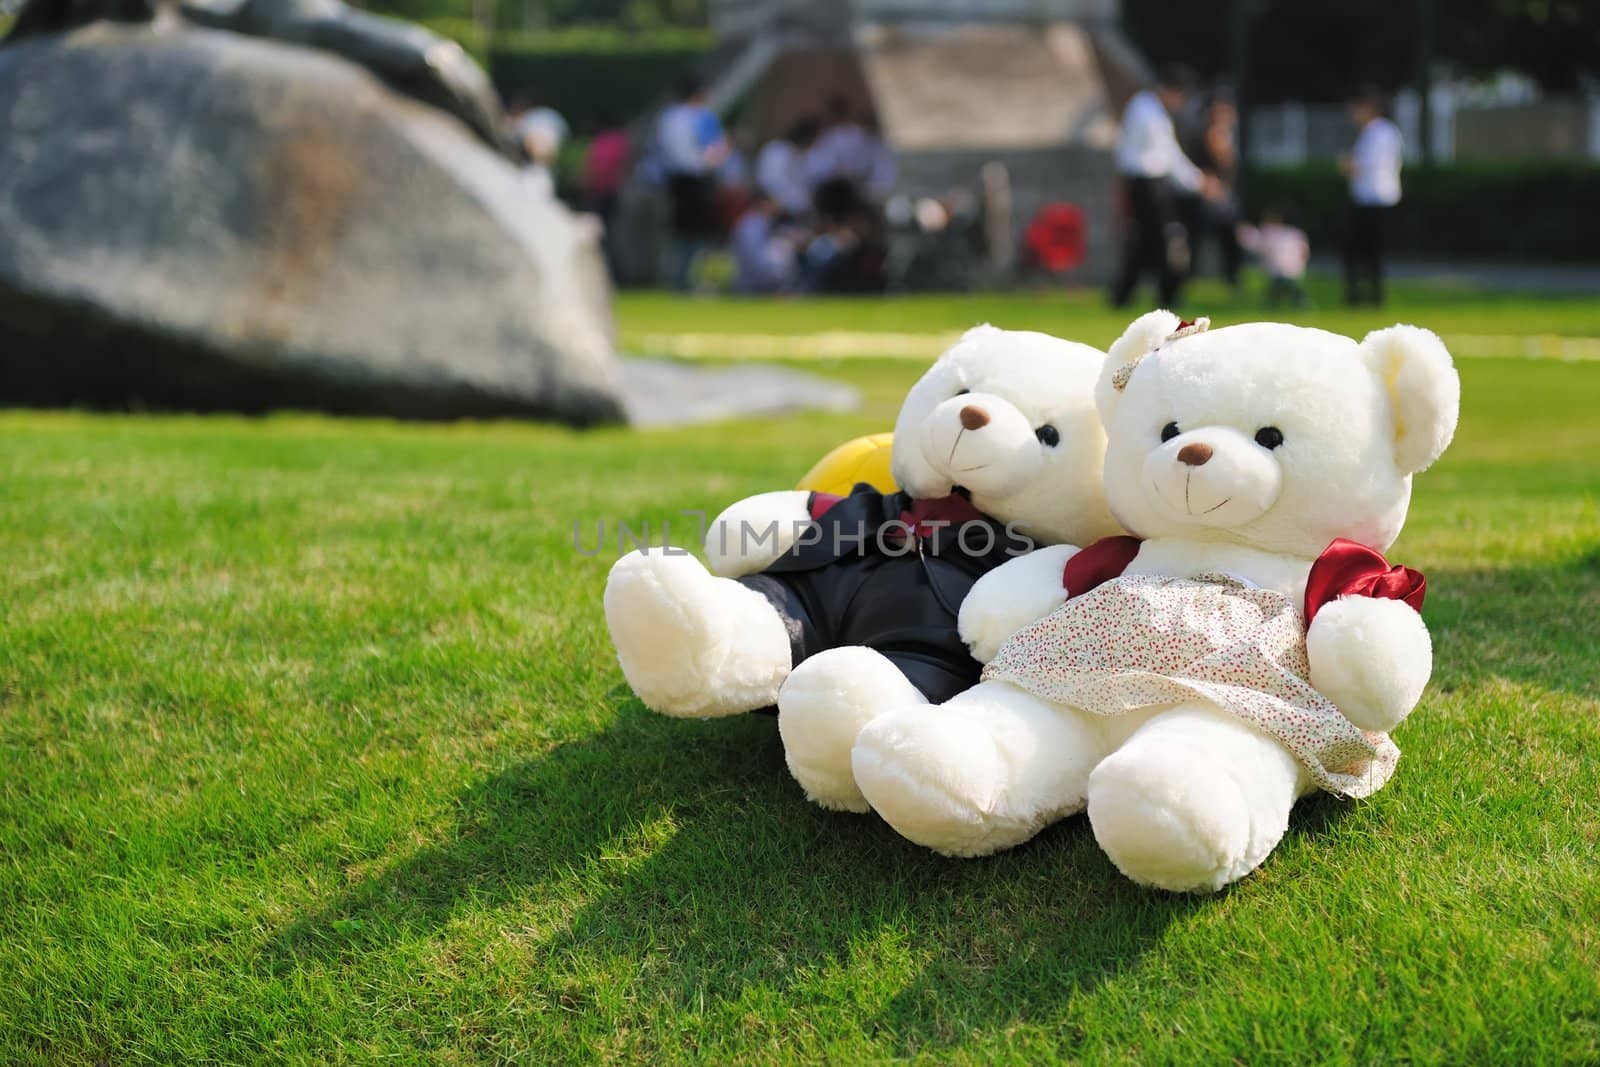 Two teddy bears by raywoo